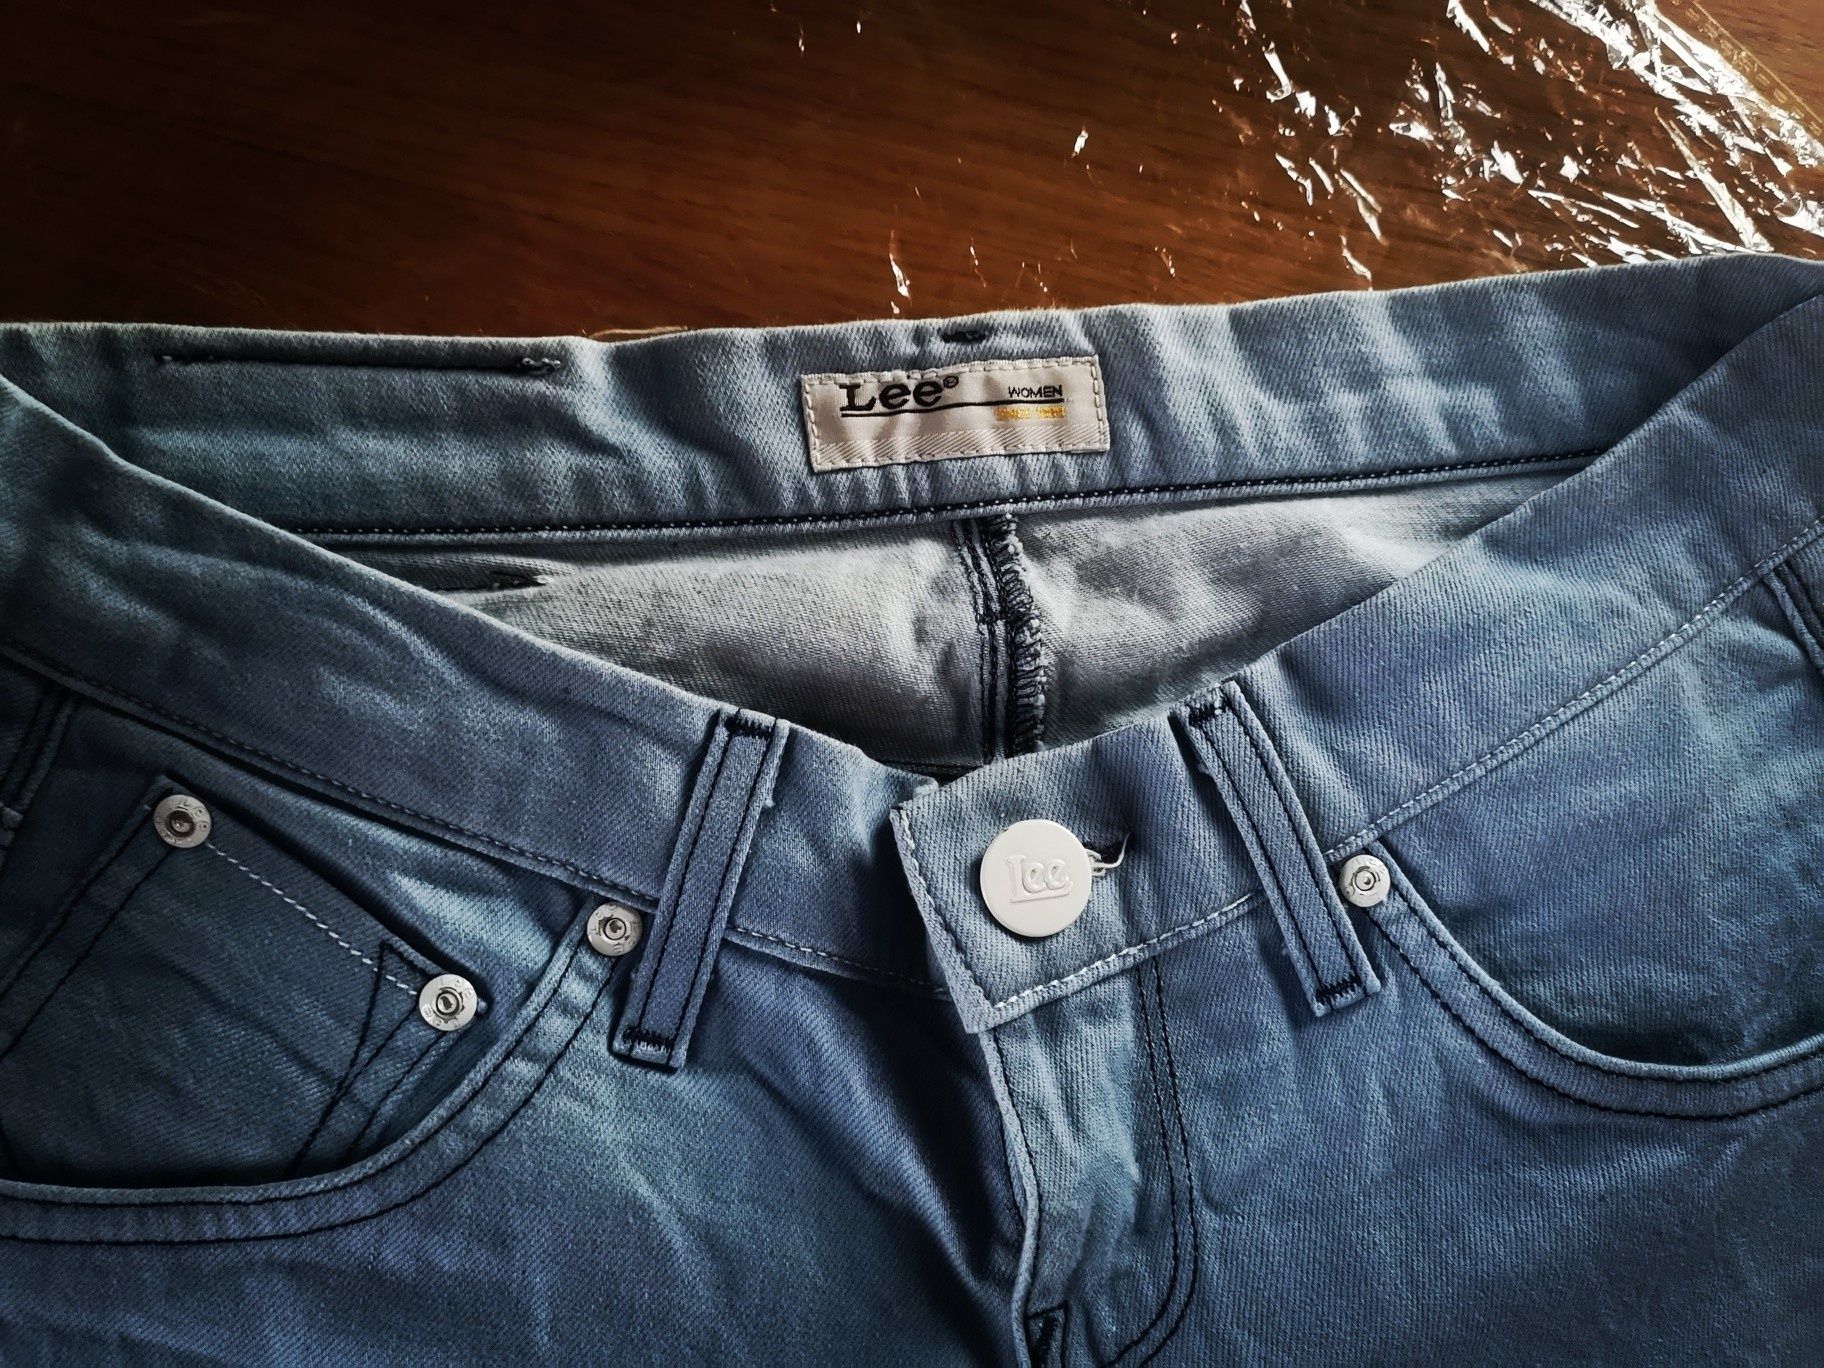 Lee spodnie nowe bez metek jasne jeans markowe W27 L33